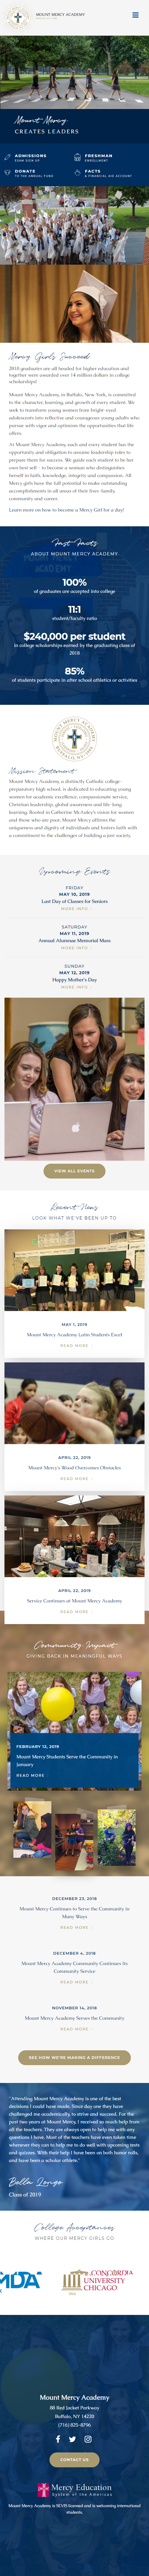 Mount Mercy Academy Mobile